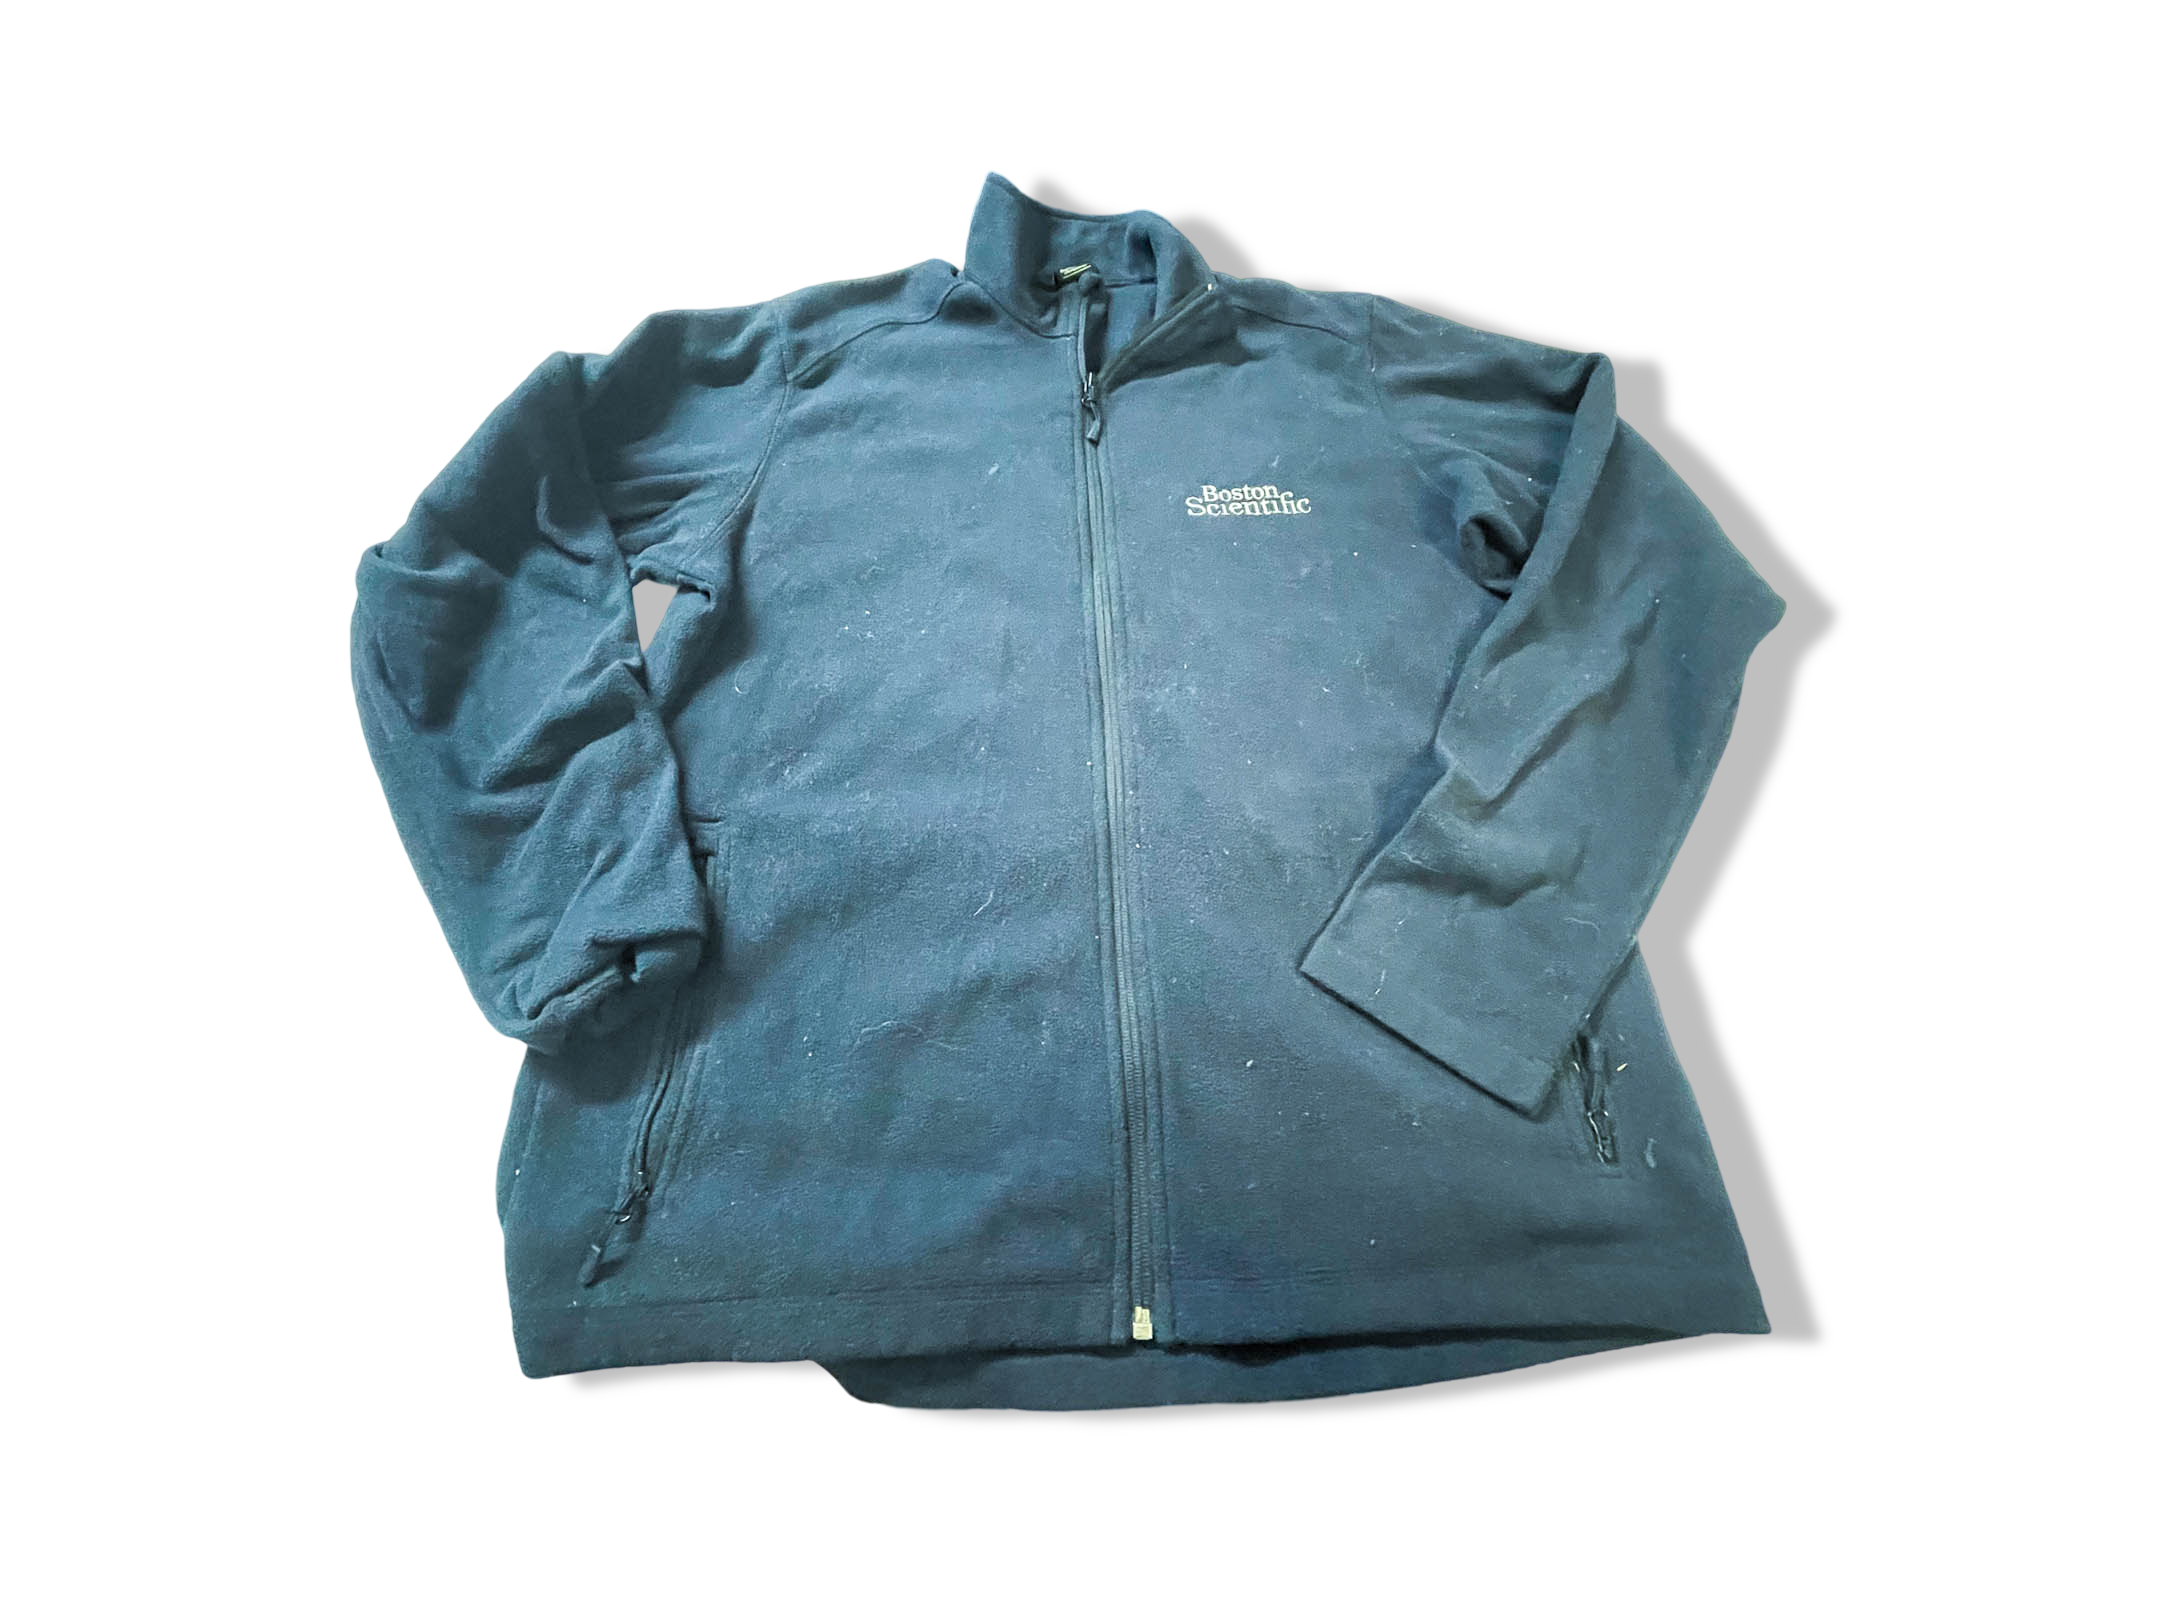 Vintage Boston Scientific Navy blue full zip high neck fleece sweatshirt in L|L31W21|SKU 3922